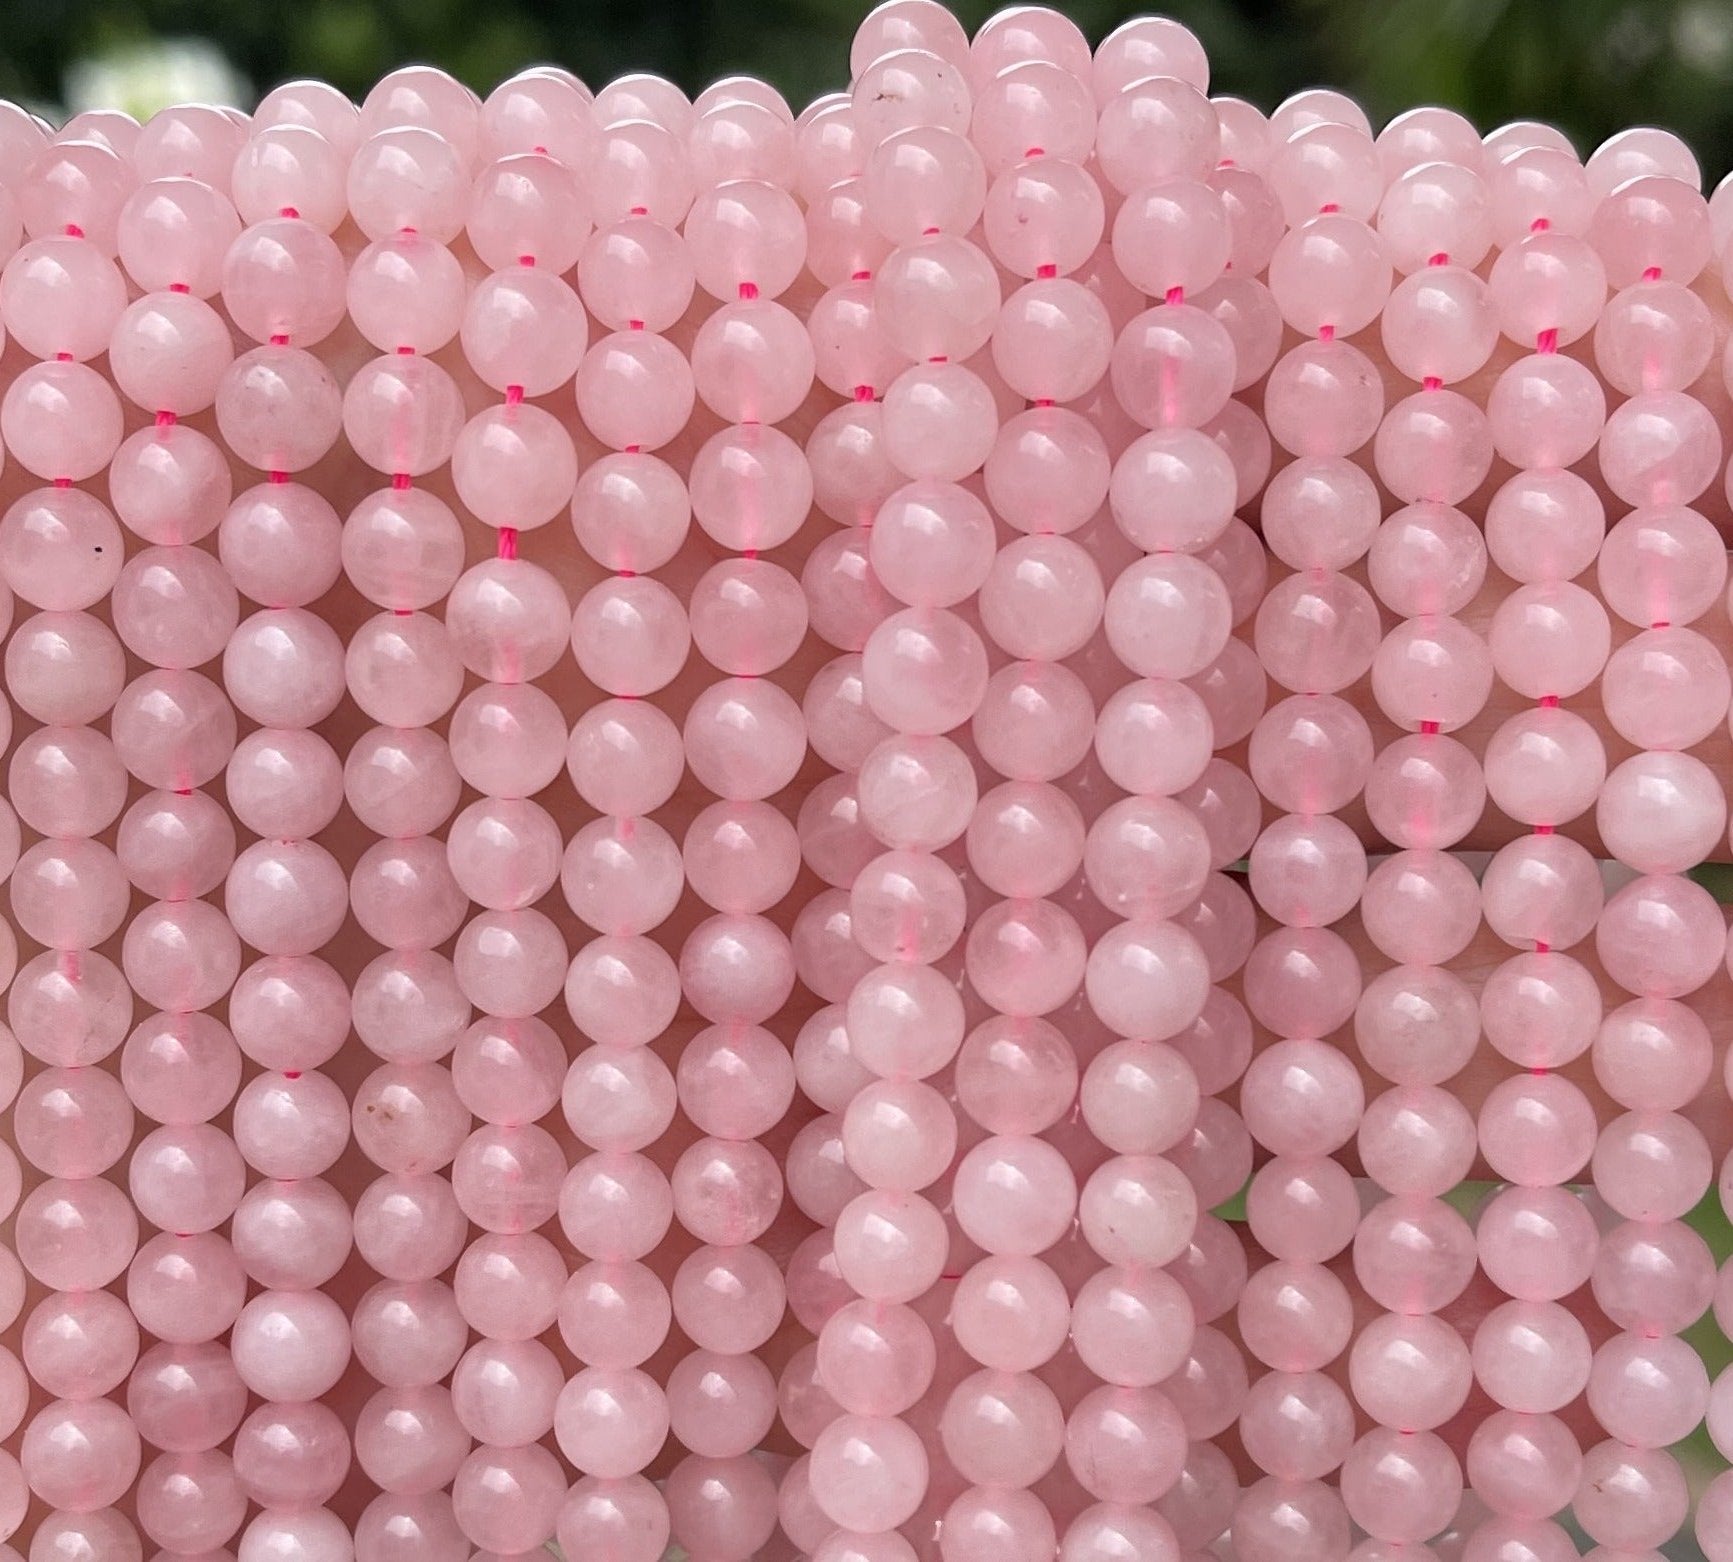 Rose Quartz 6mm round natural gemstone beads 15.5" strand